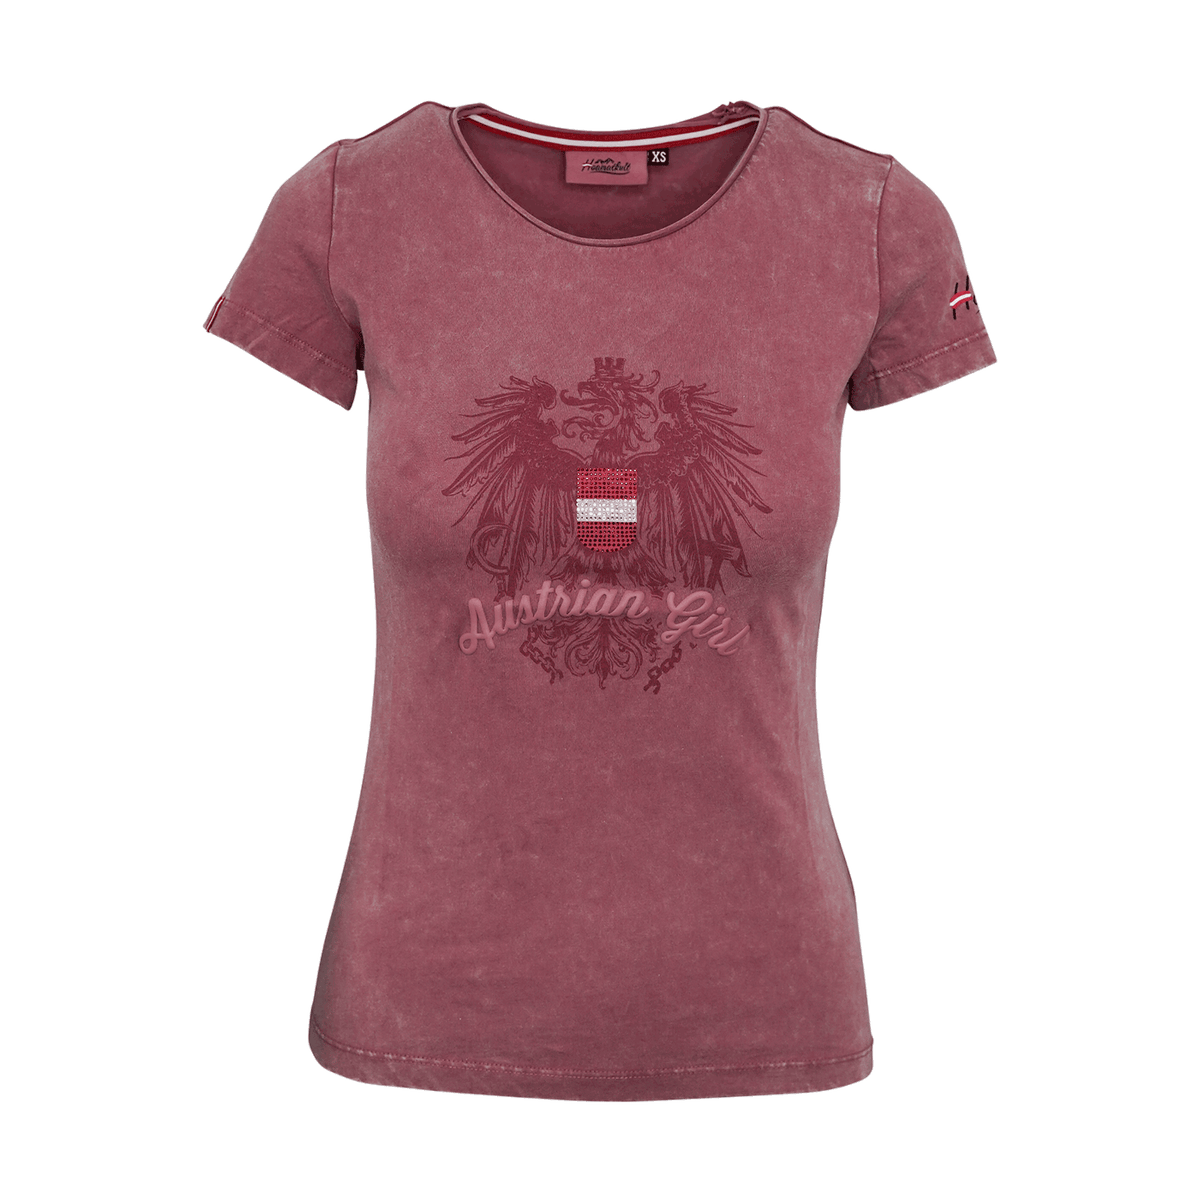 Rosa Austrian Girl T-Shirt von Hoamatkult